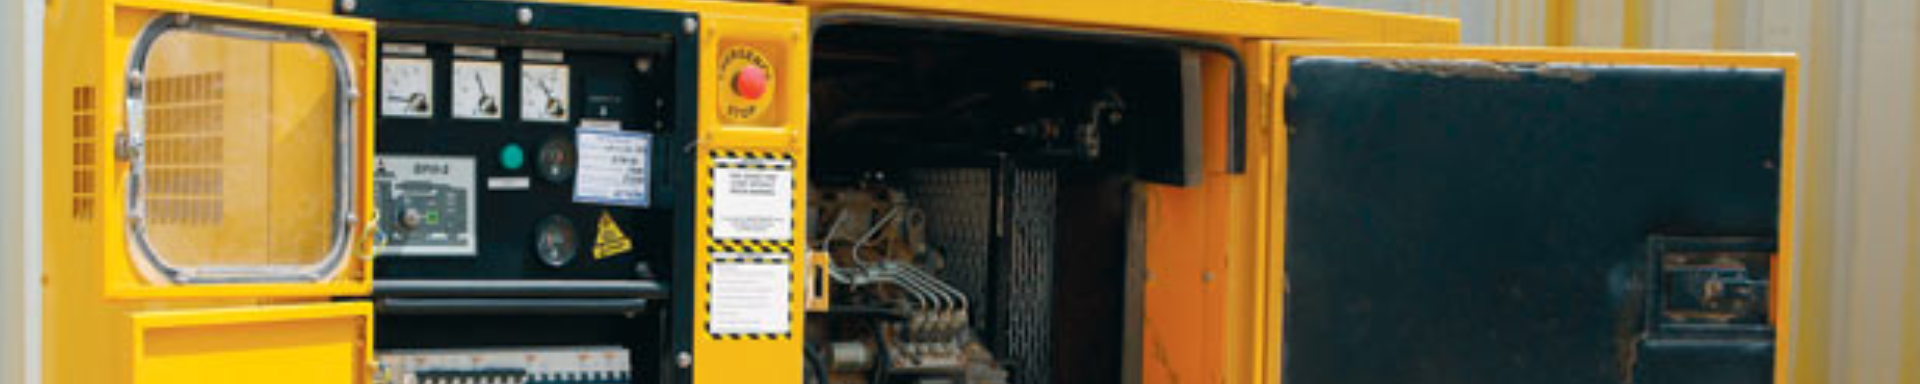 Generators & Power Supply | RogueFuel.ca | Munro Industries rf-1007030802